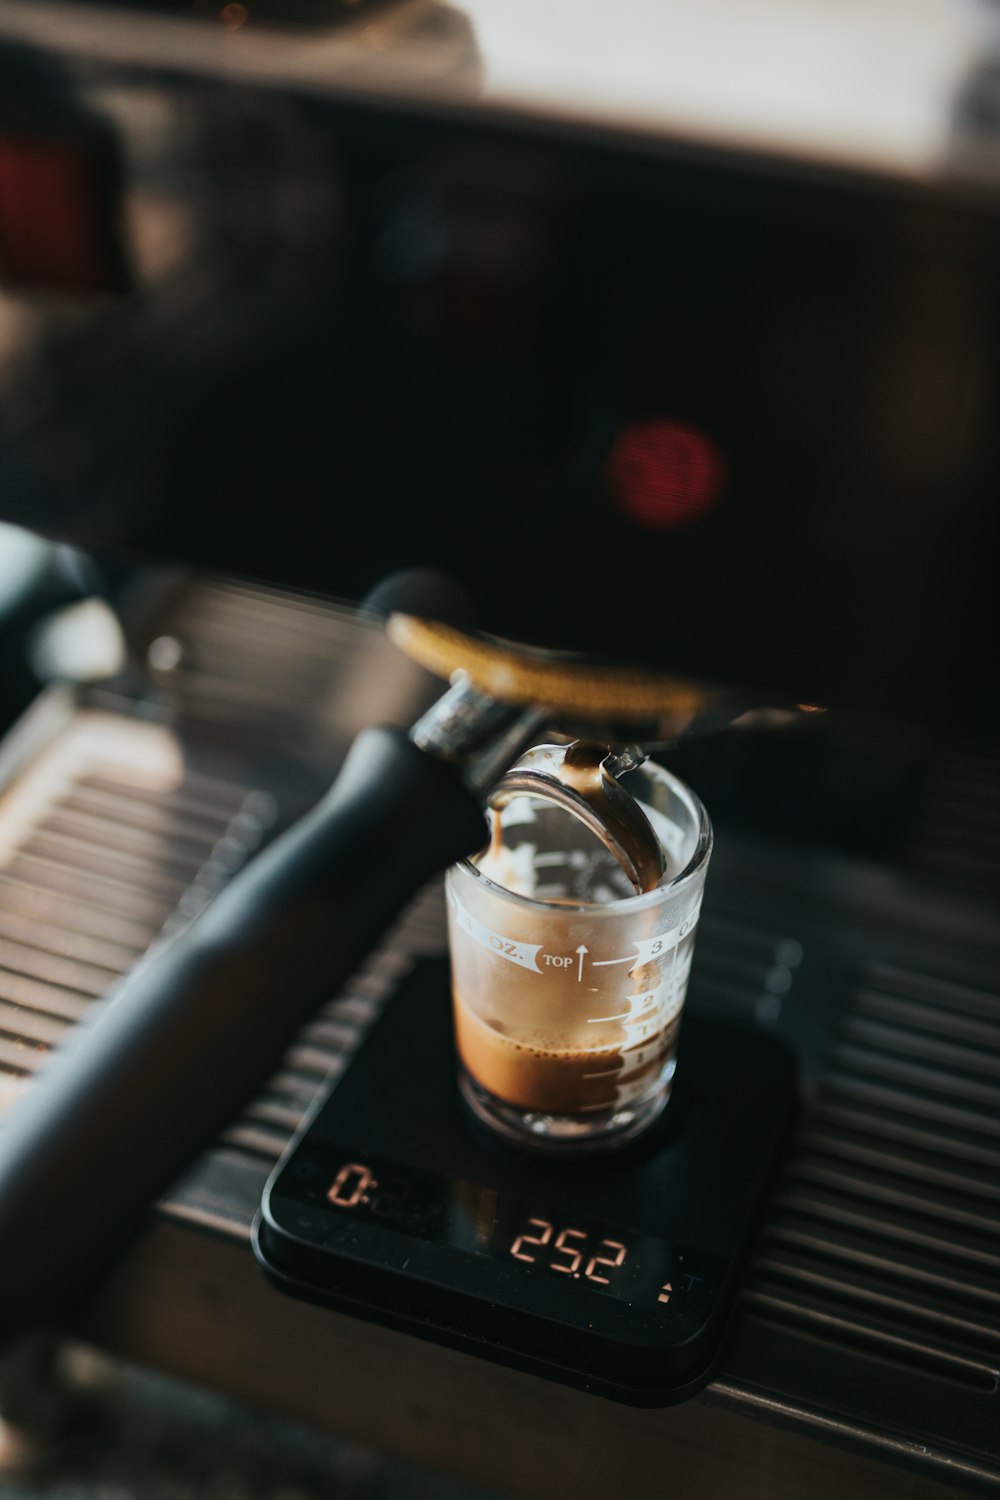 Foto de primer plano de la cafetera espresso negra que archiva la taza de vidrio transparente